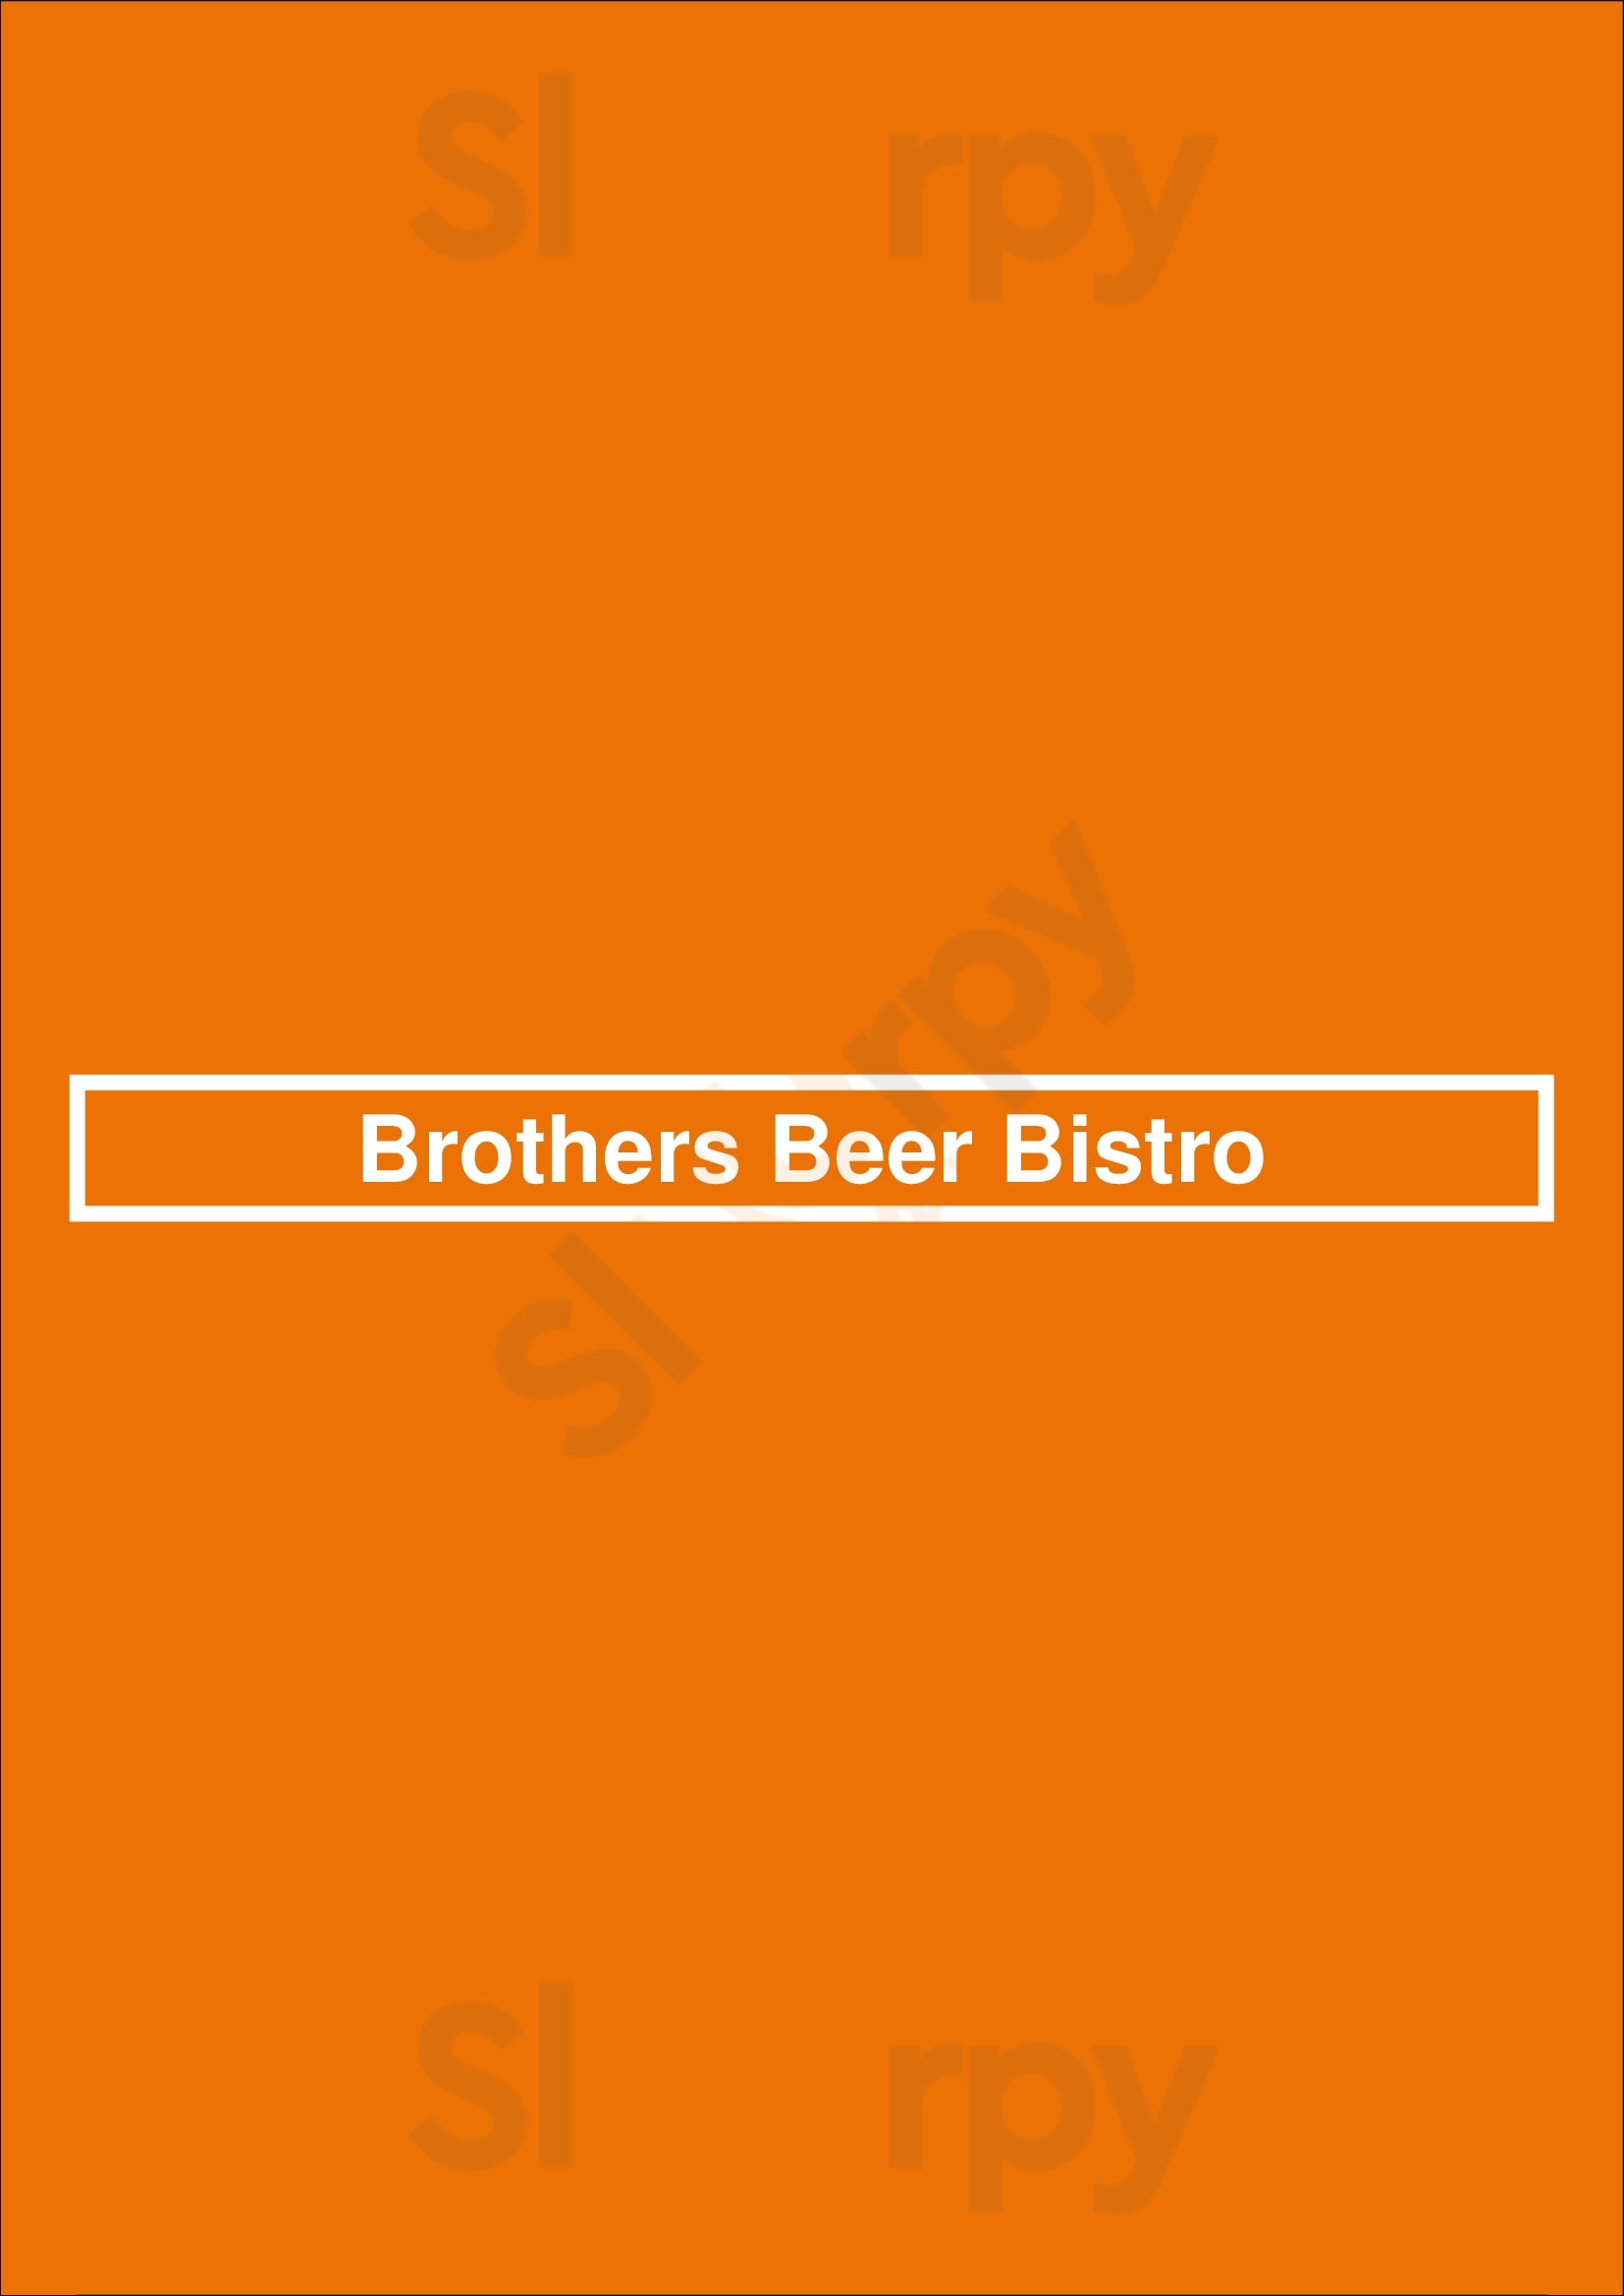 Brothers Beer Bistro Ottawa Menu - 1